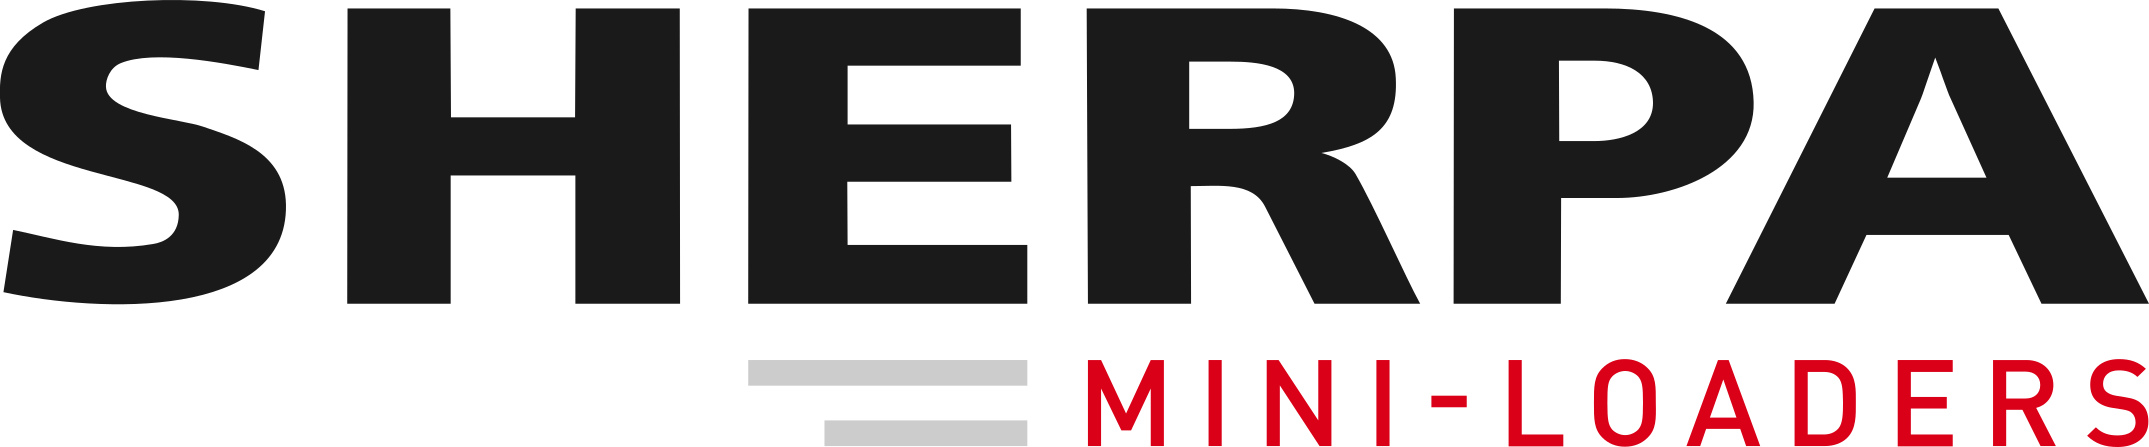 szilas-epito-sherpa-logo